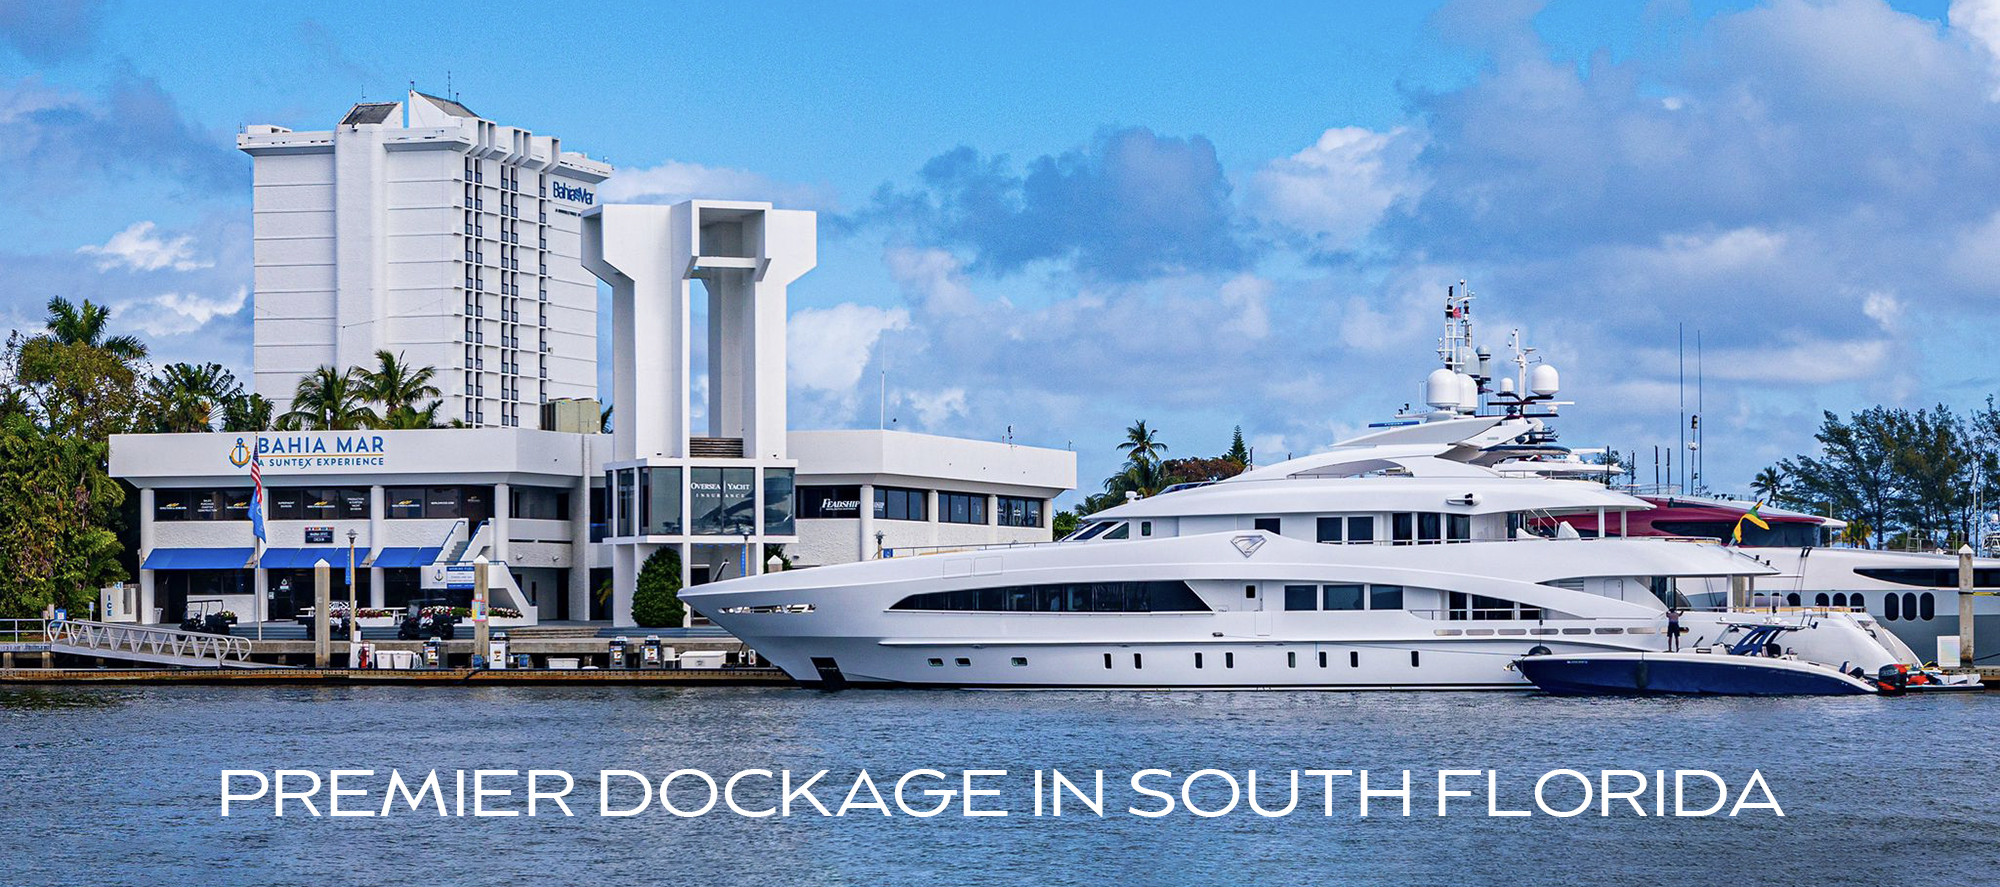 Premier Dockage In South Florida